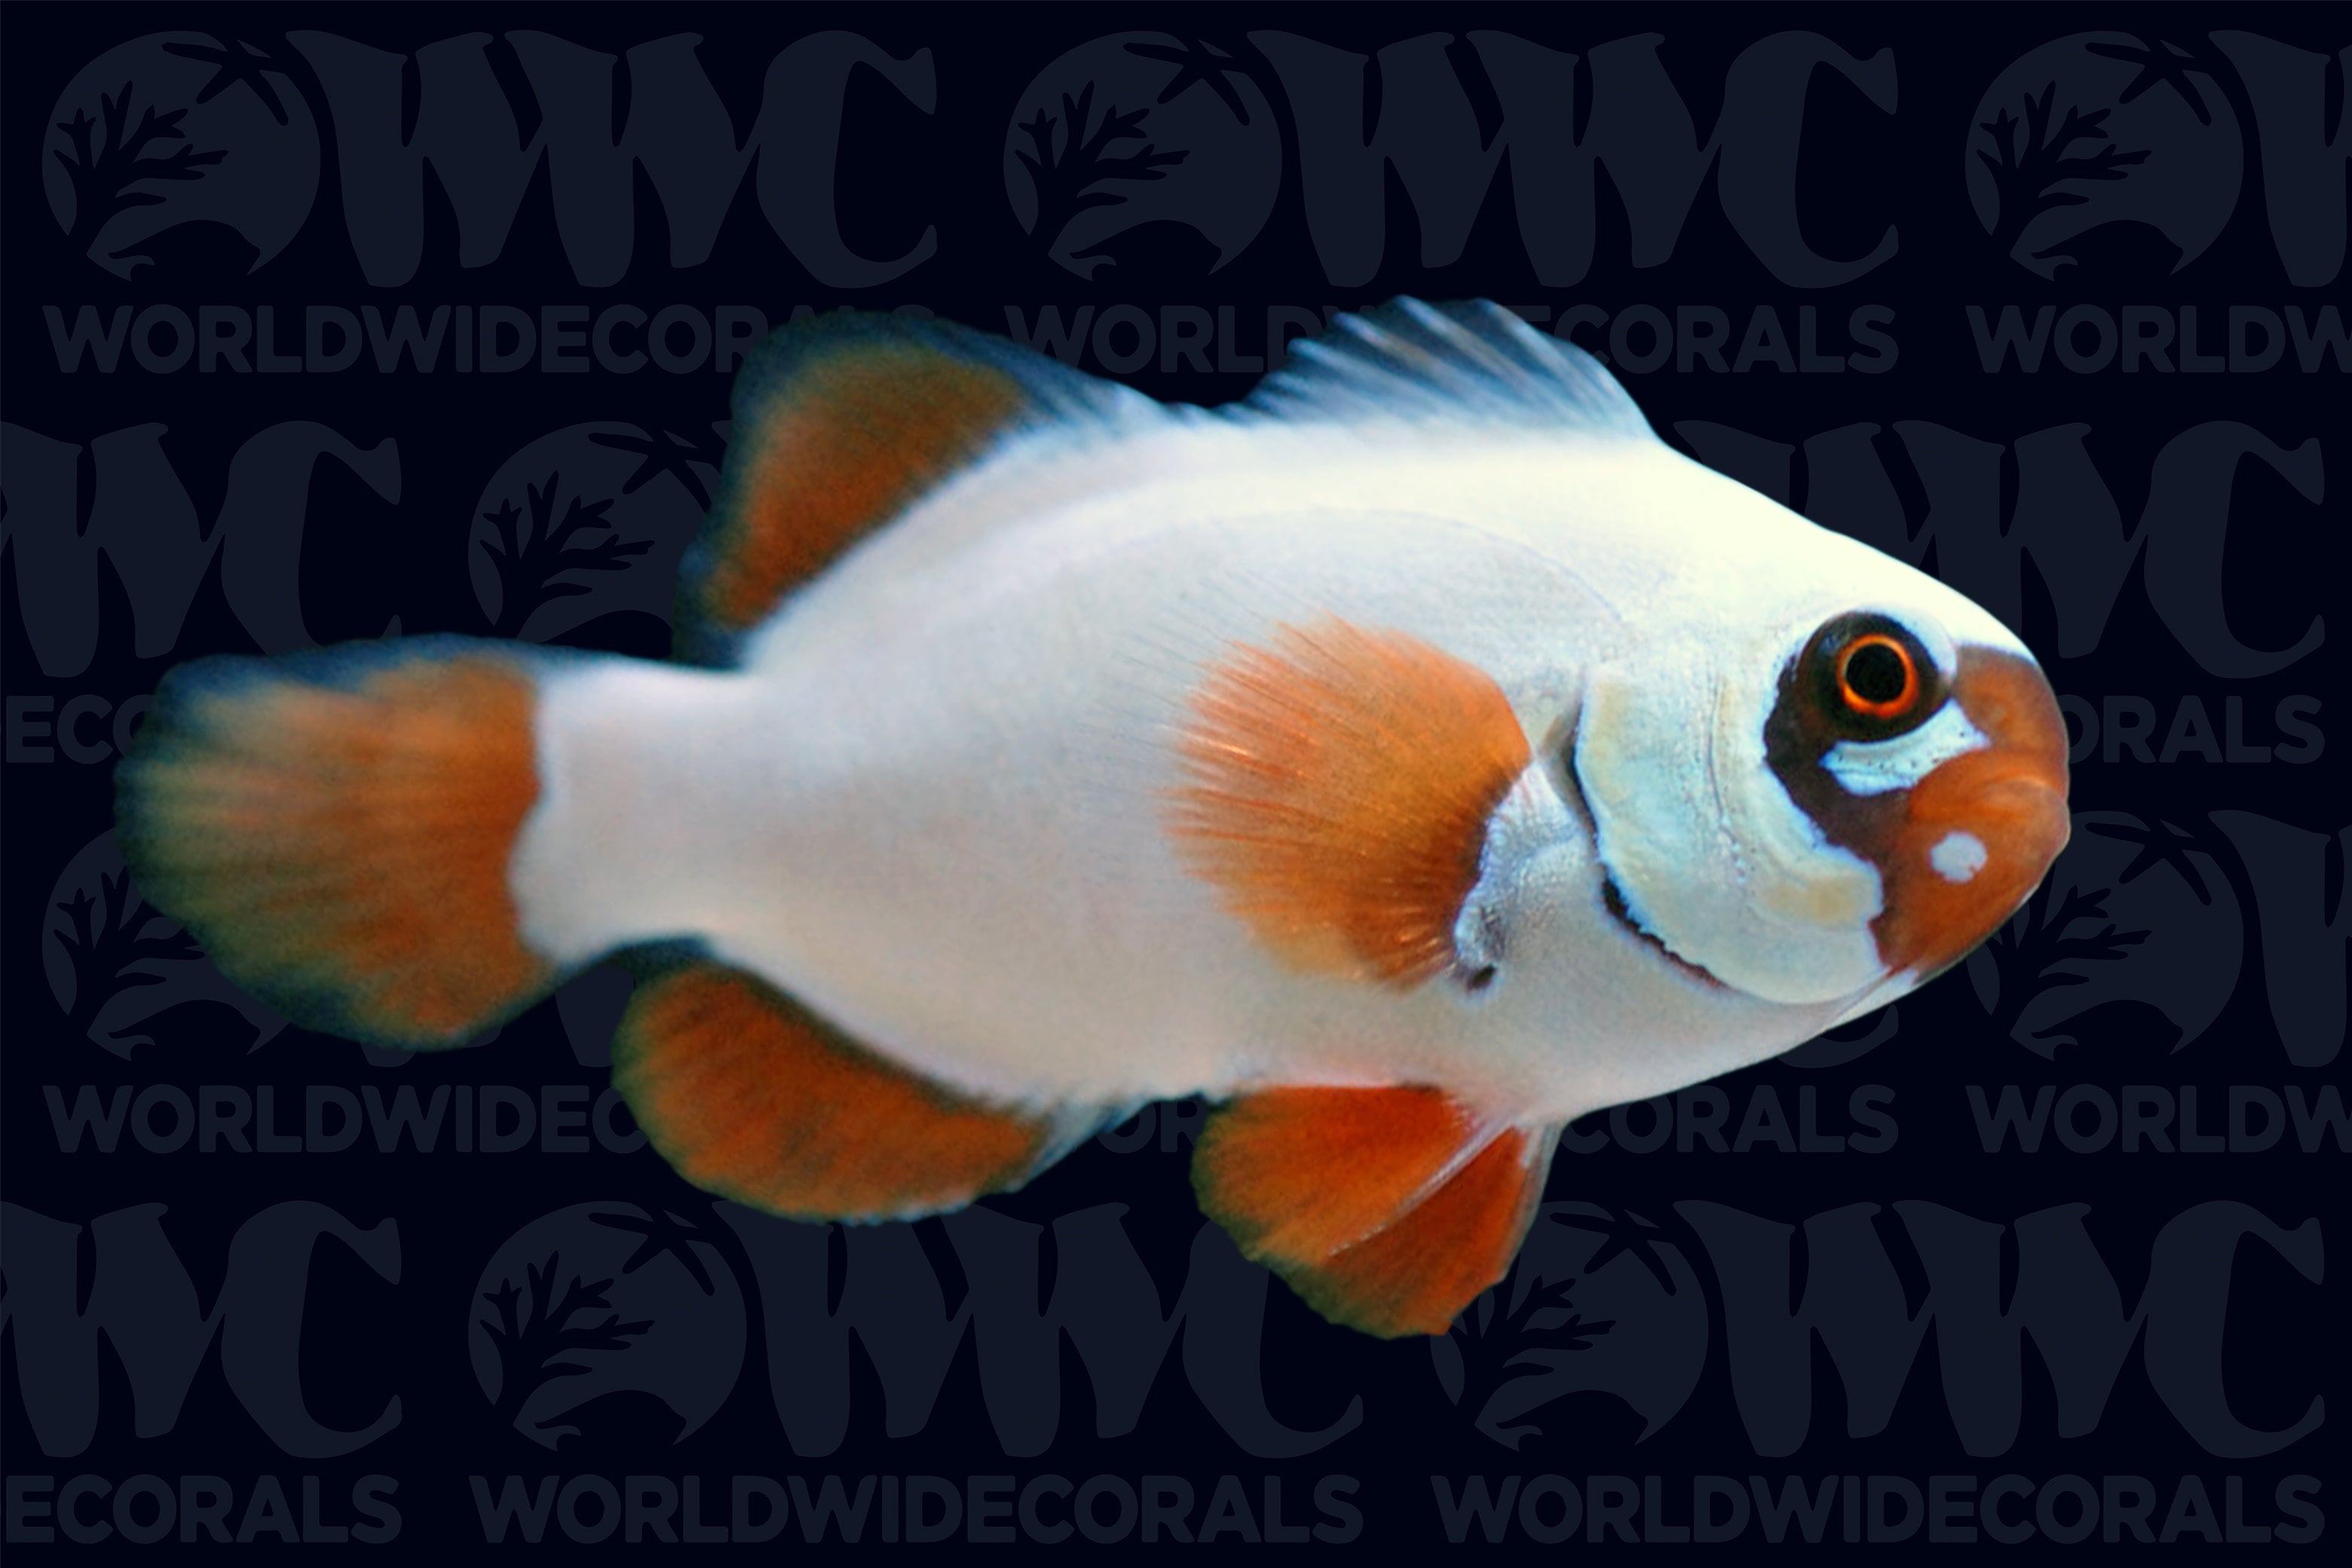 Gold Nugget Maroon Clownfish - Aquacultured - Indonesia